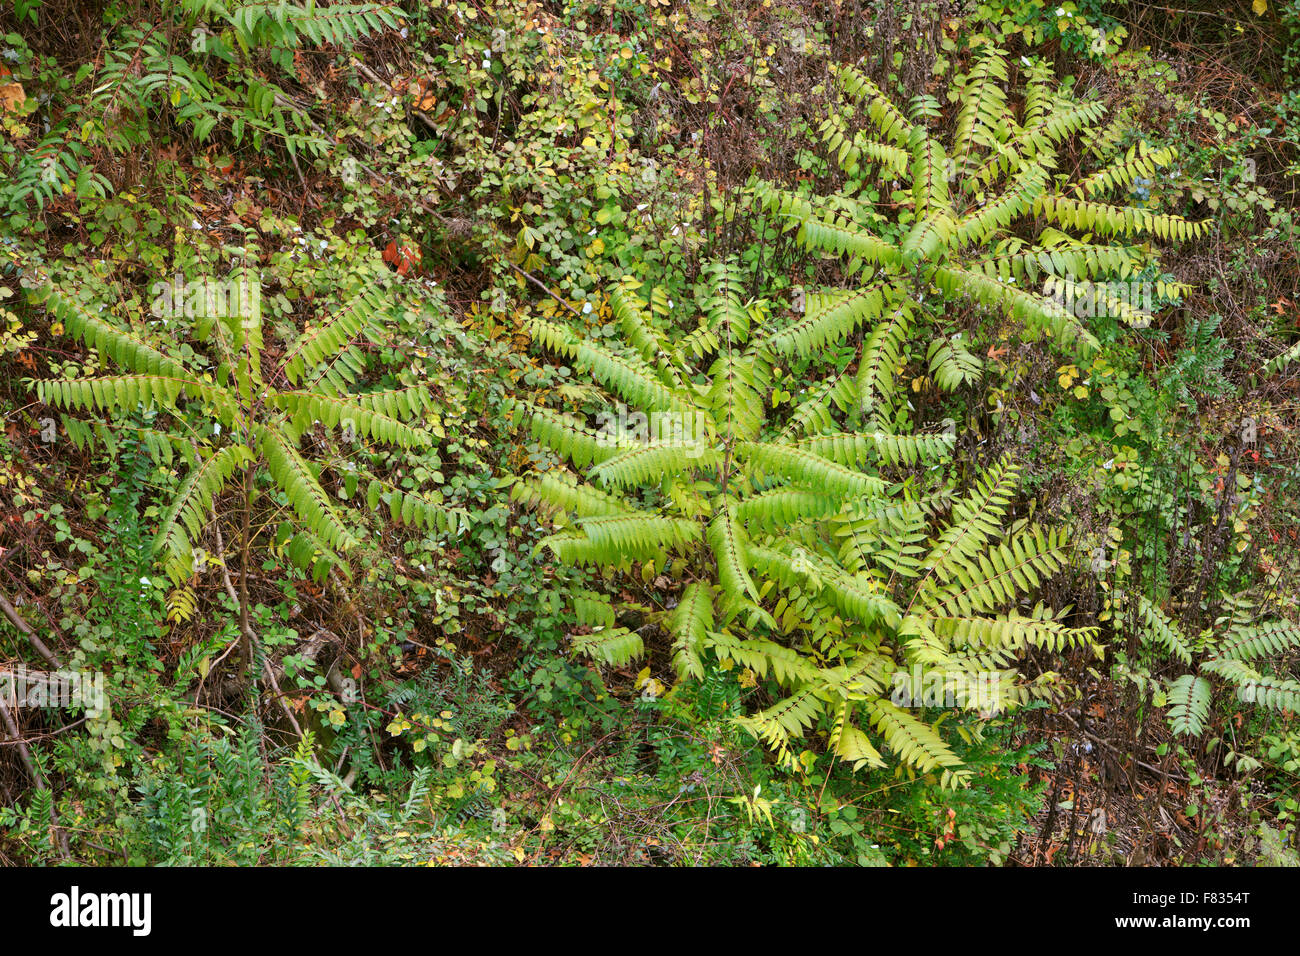 Sumac bushes (Rhus sp.) growing on a hillside. Stock Photo